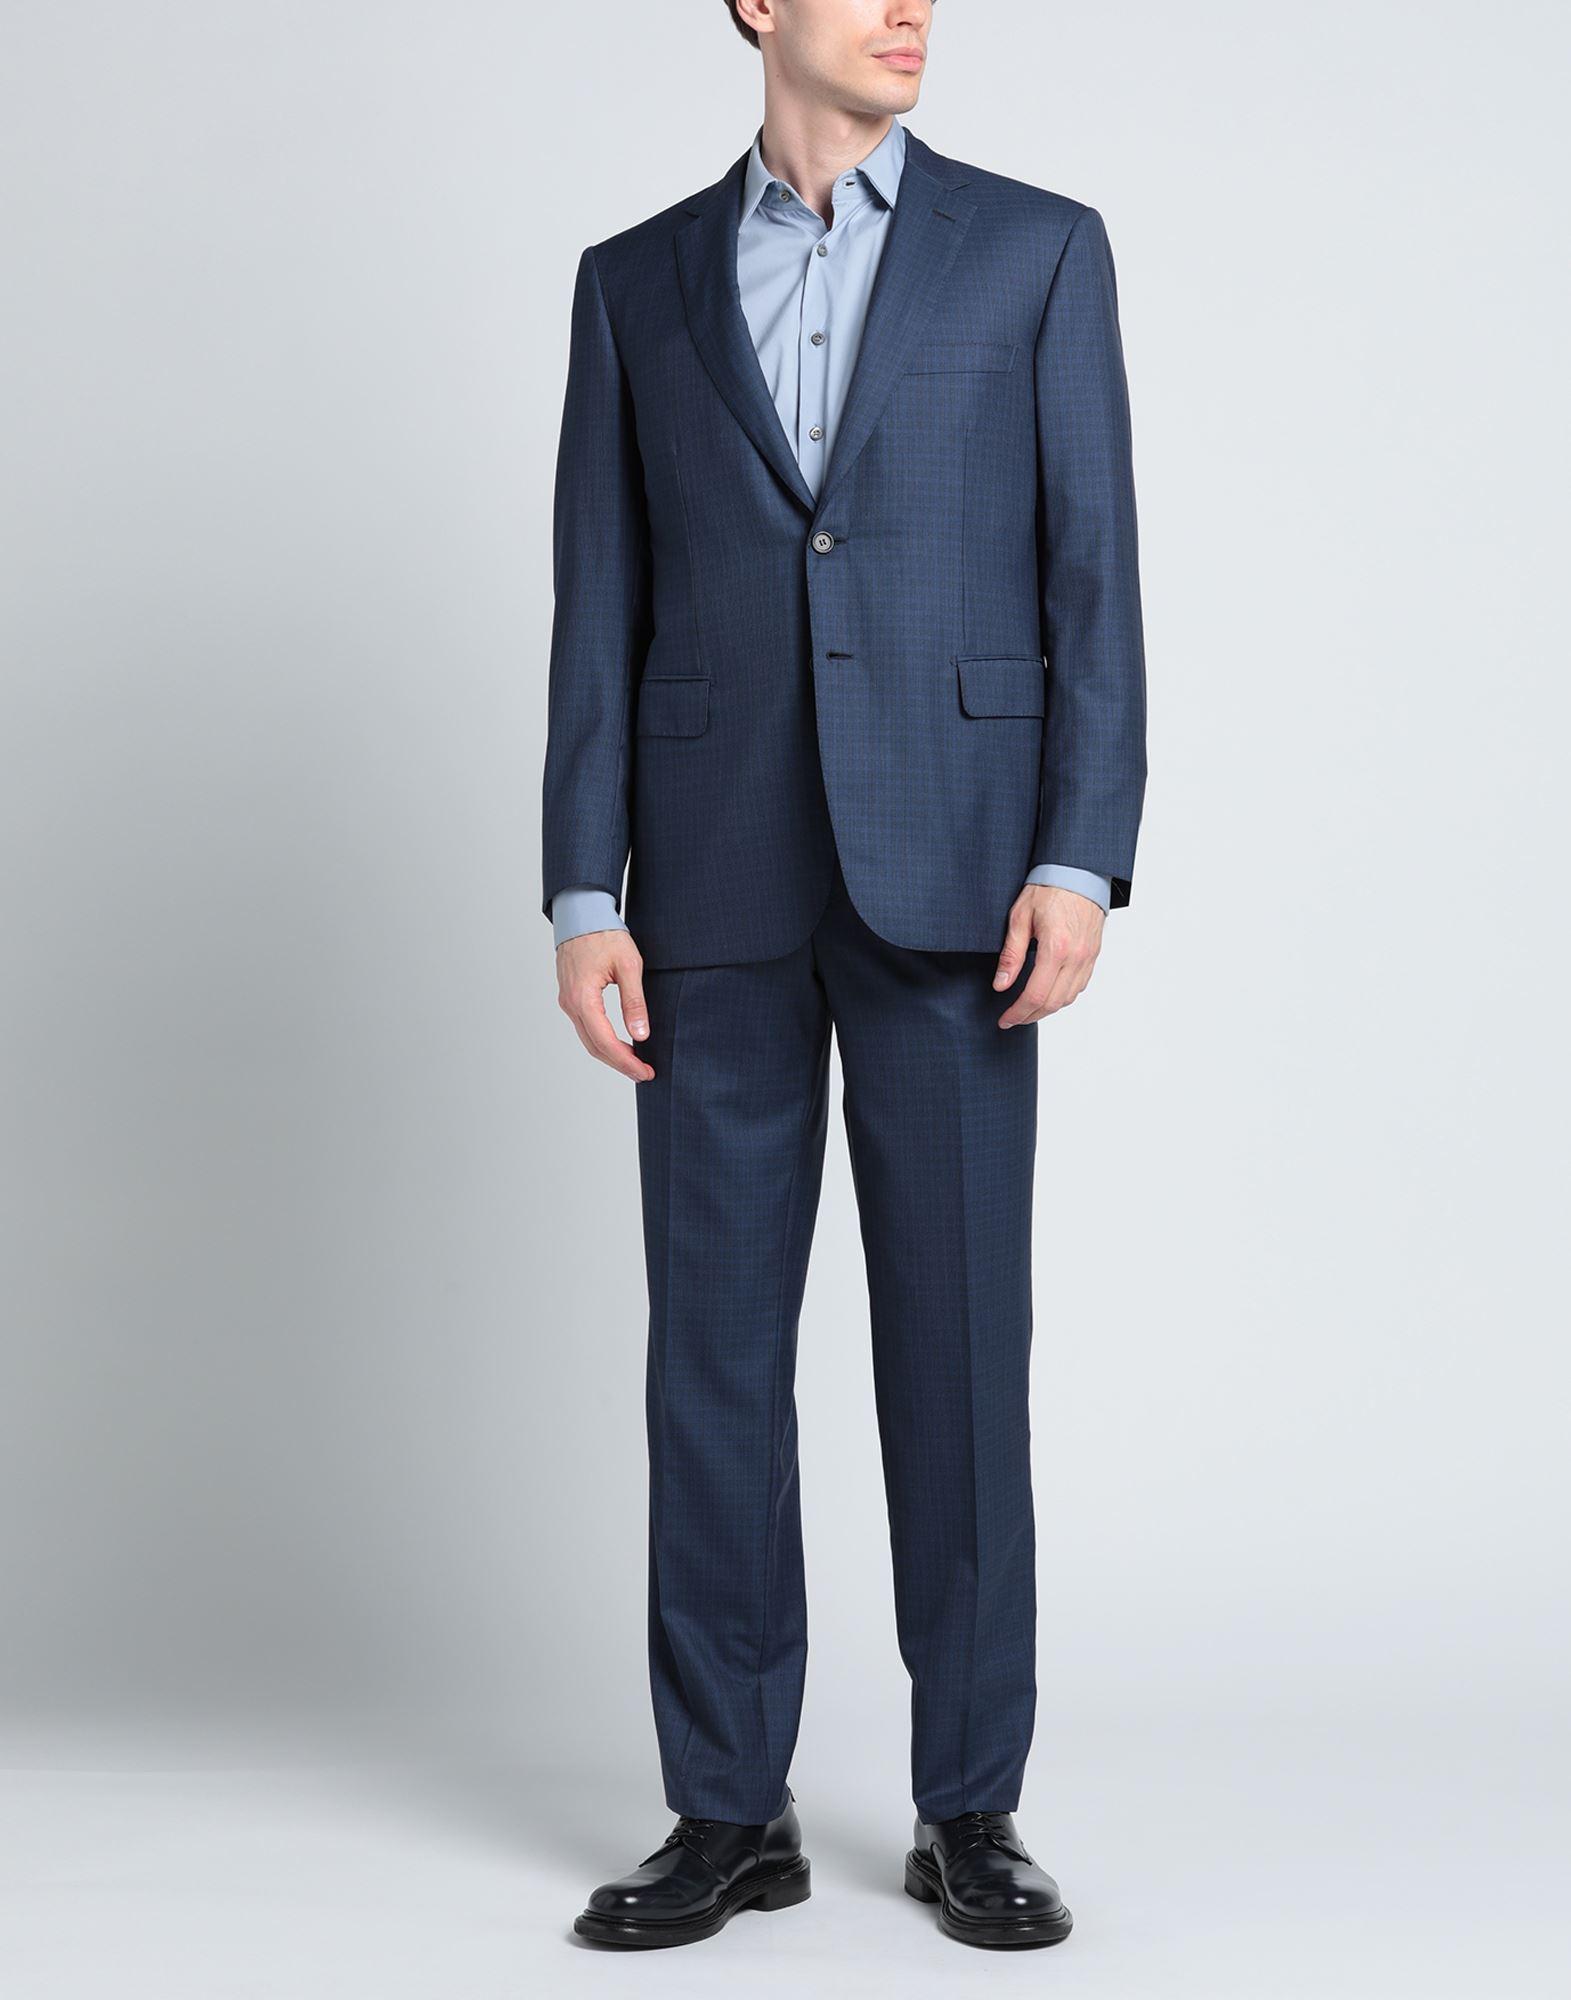 BRIONI suit 'Brunico' grey-blue patterned | BRAUN Hamburg